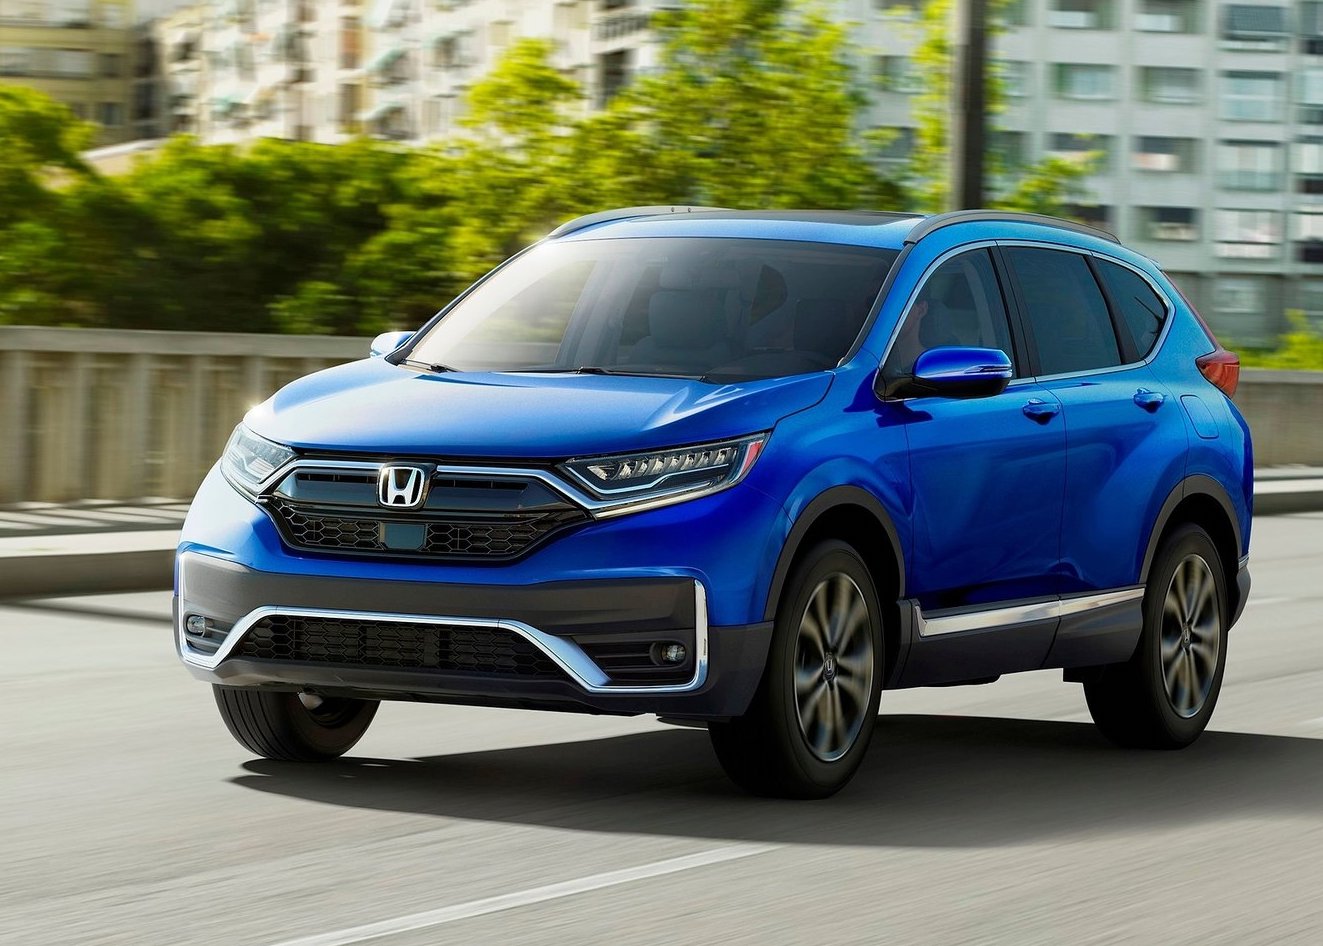 Honda CRV hybrid 2020 model unveiled in America Automacha